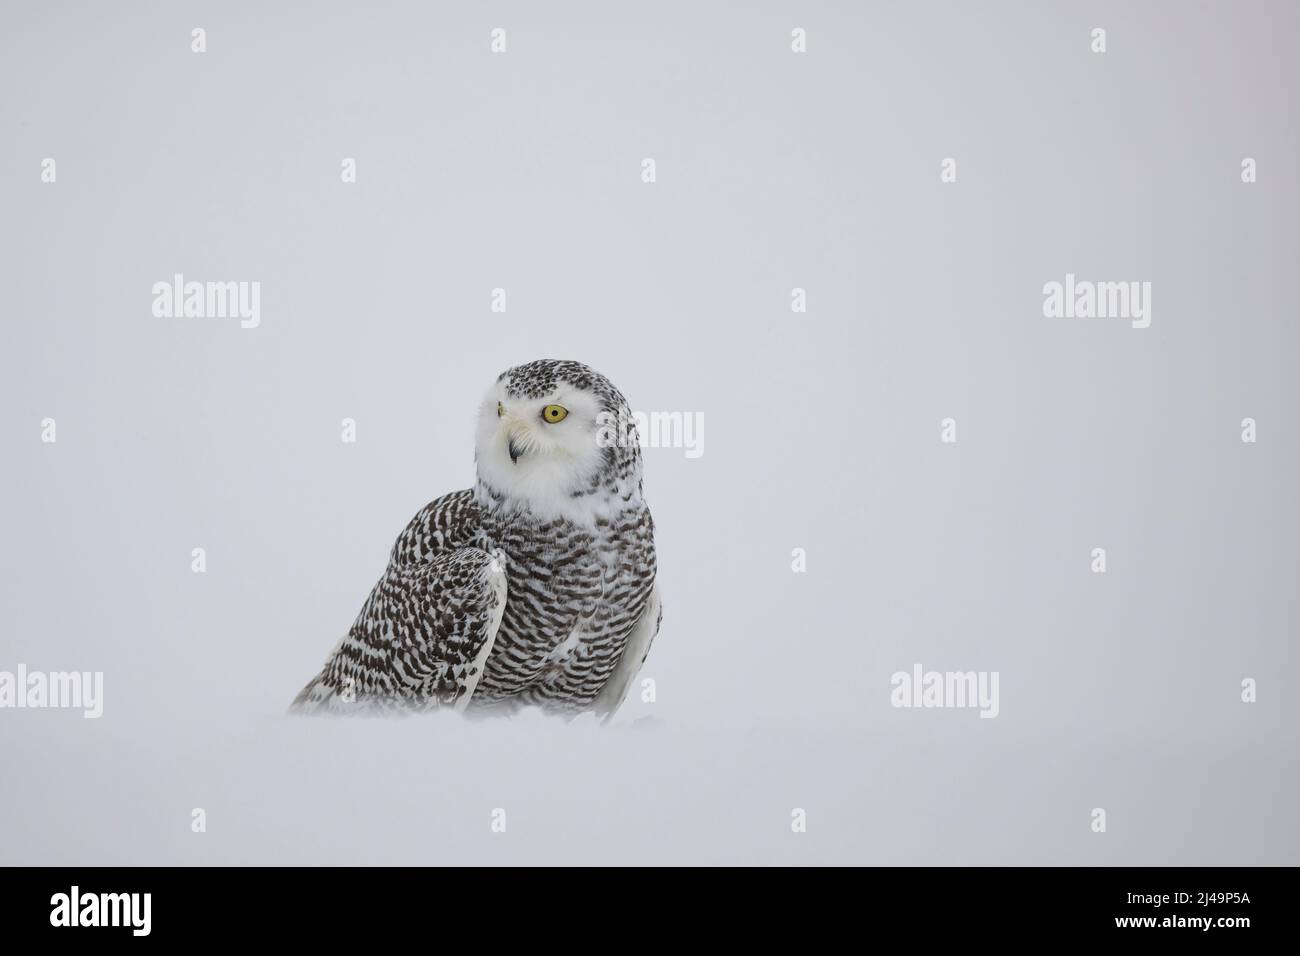 Schnee-Eule, snowy owl, Bubo scandiacus Stock Photo